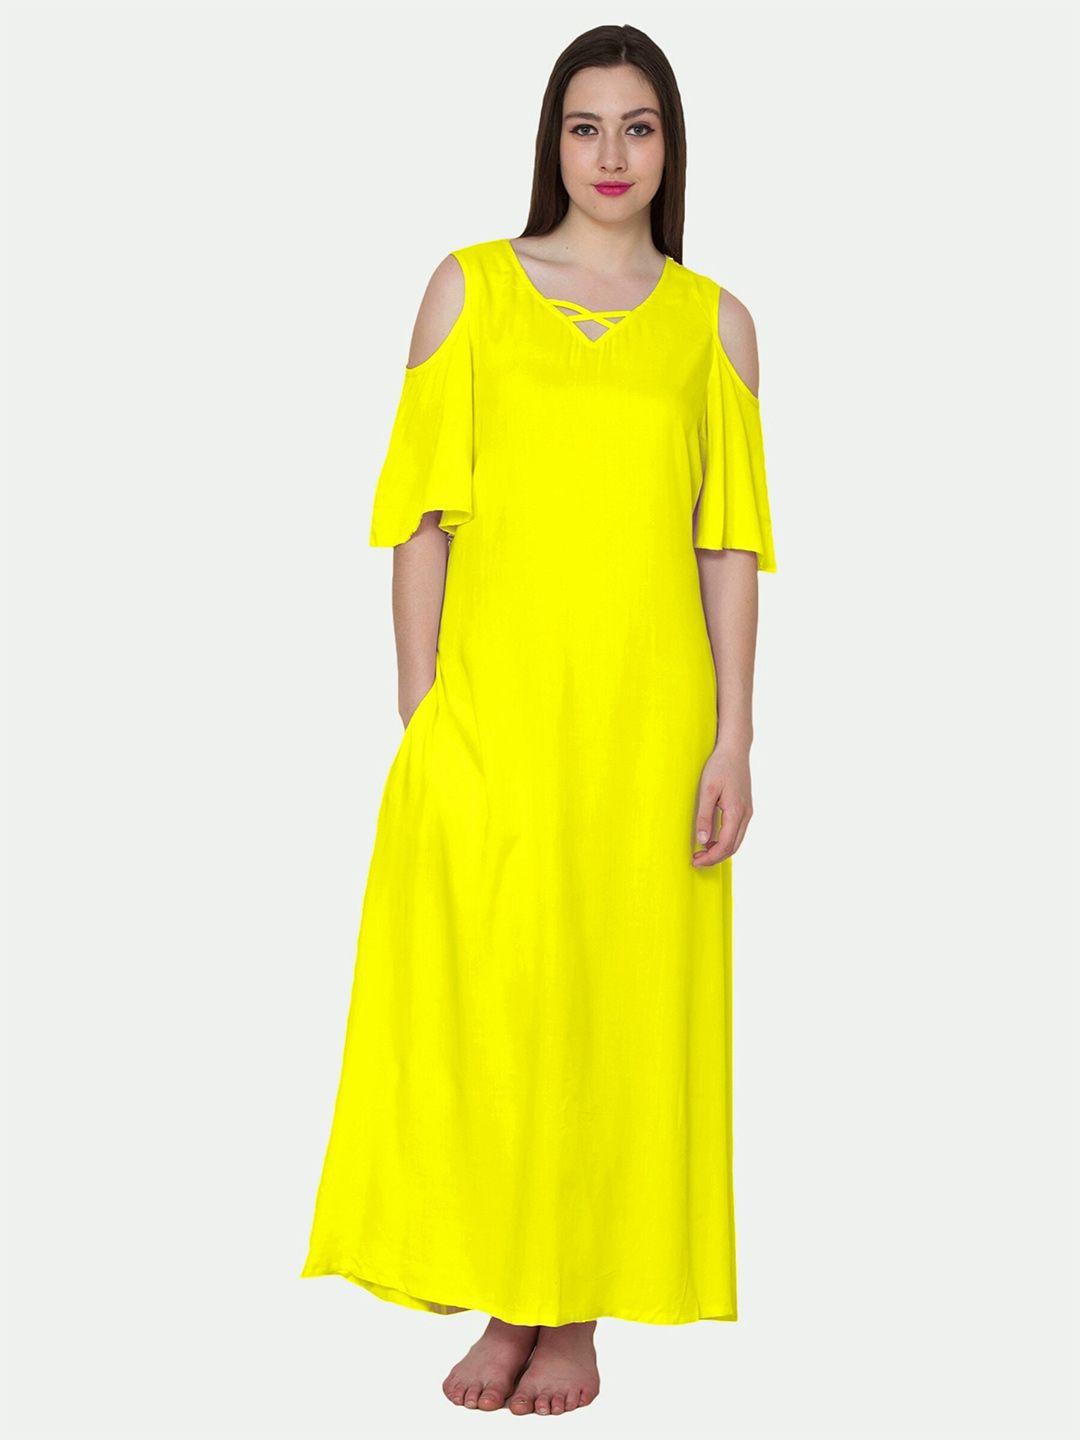 patrorna women solid cotton blend maxi dress